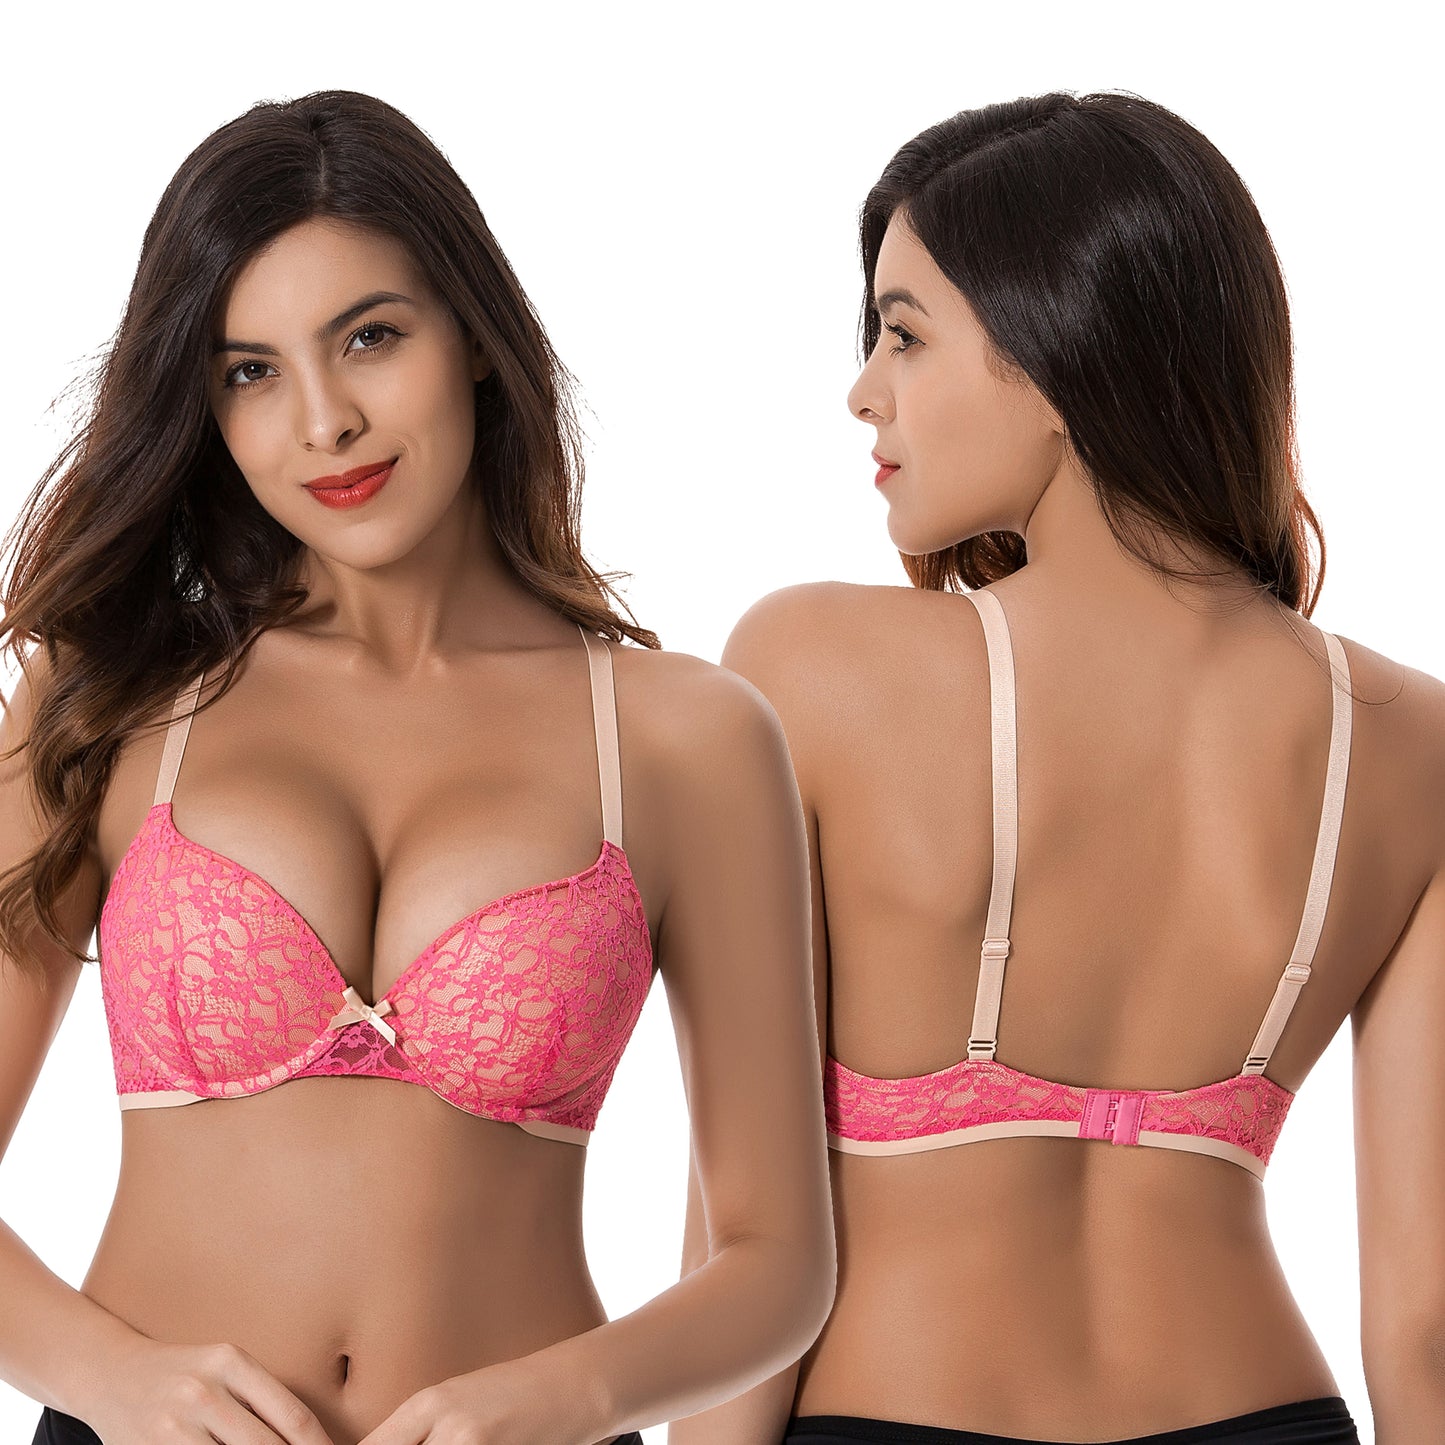 Women's Plus Size Perfect Shape Add 1 Cup Push Up Underwire Lace Bras-2Pk-Dk Pink,Black